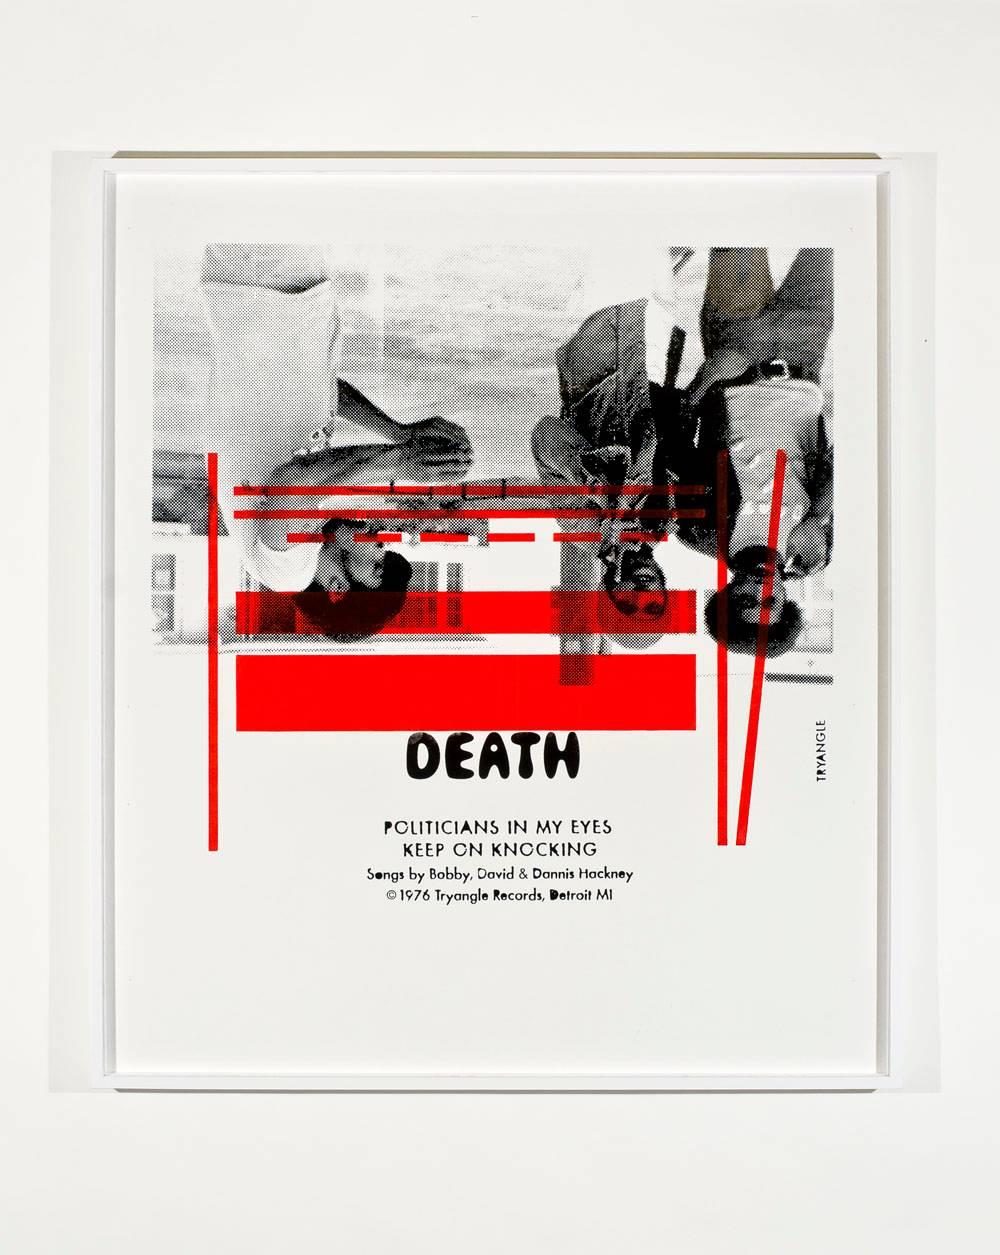 A Reductivist Portrait of Death - Mixed Media Art by Skylar Fein